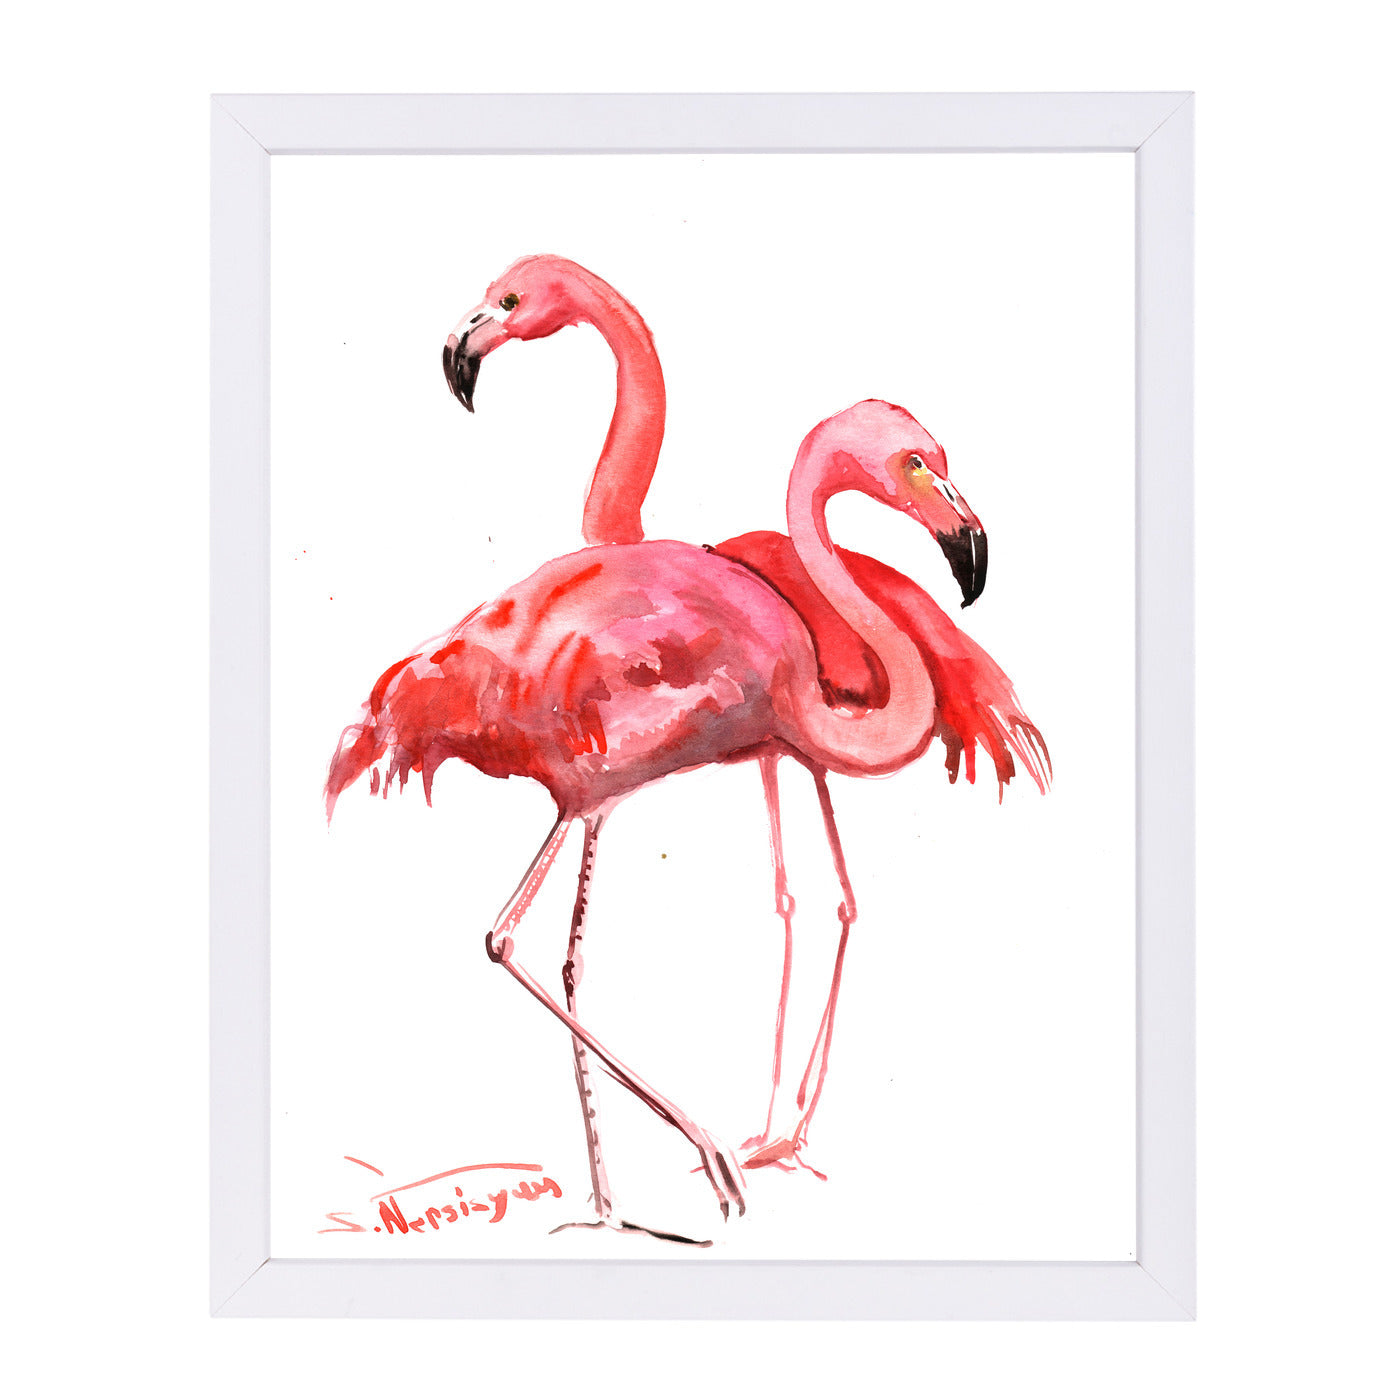 Flamingos by Suren Nersisyan Framed Print - Americanflat